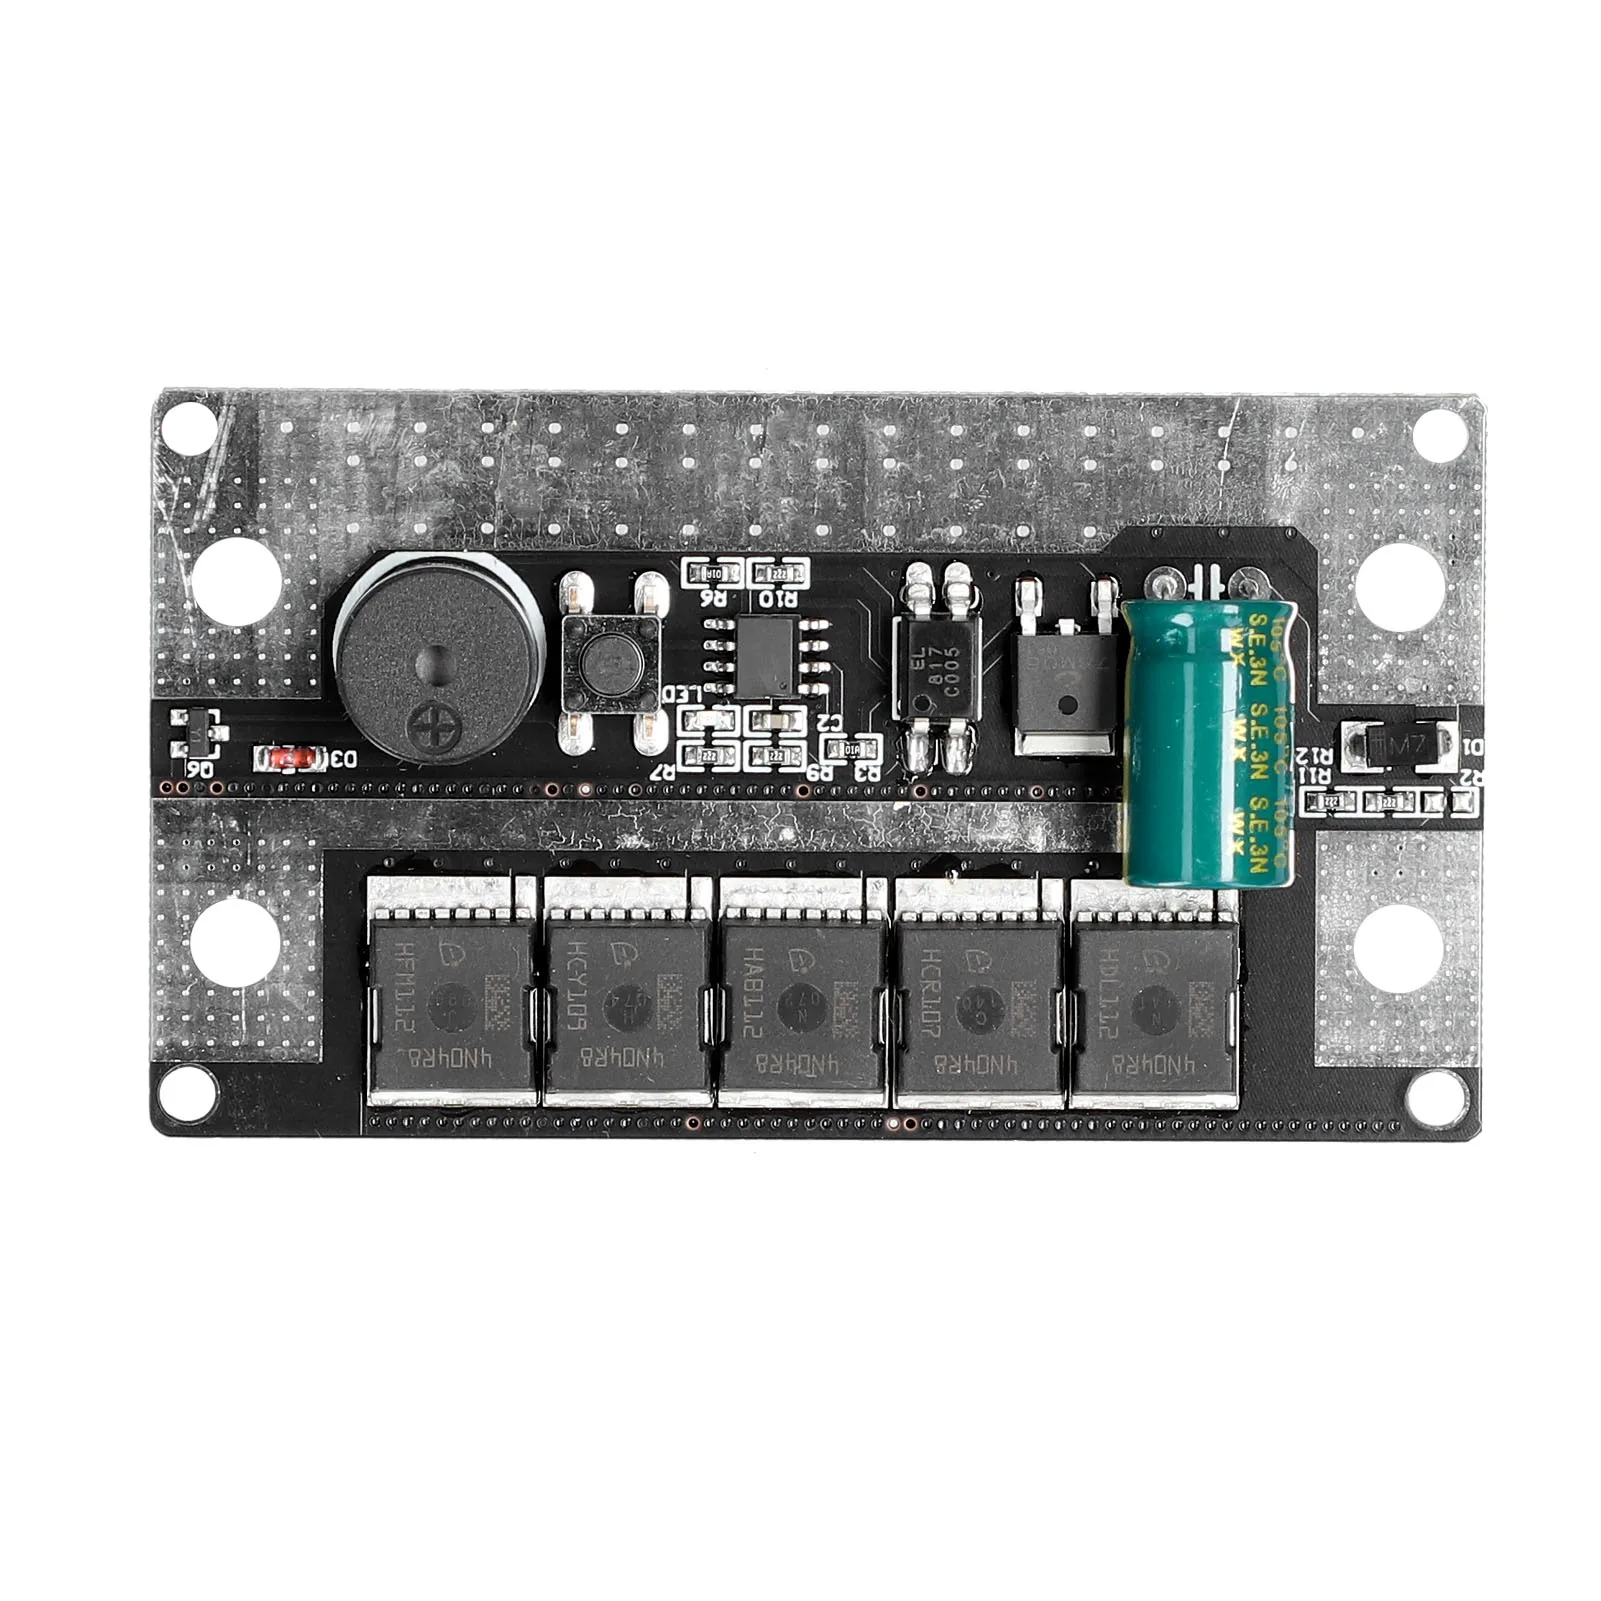 DIY Spot Welders Pen Portable 12V Battery Storage Spot-Welding Printed Circuit Board Welding Equipment Tools soldering stations